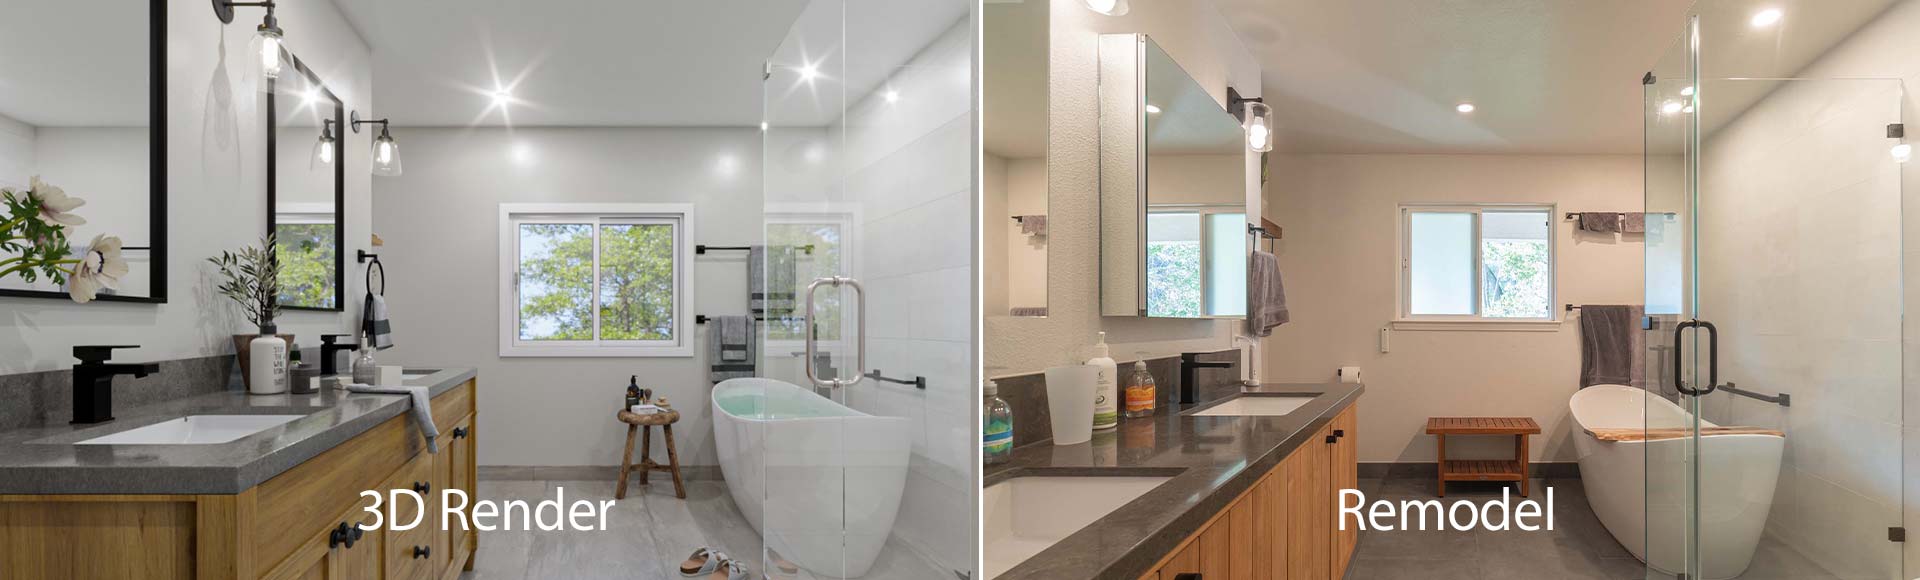 bathroom remodel 3d render vs actual